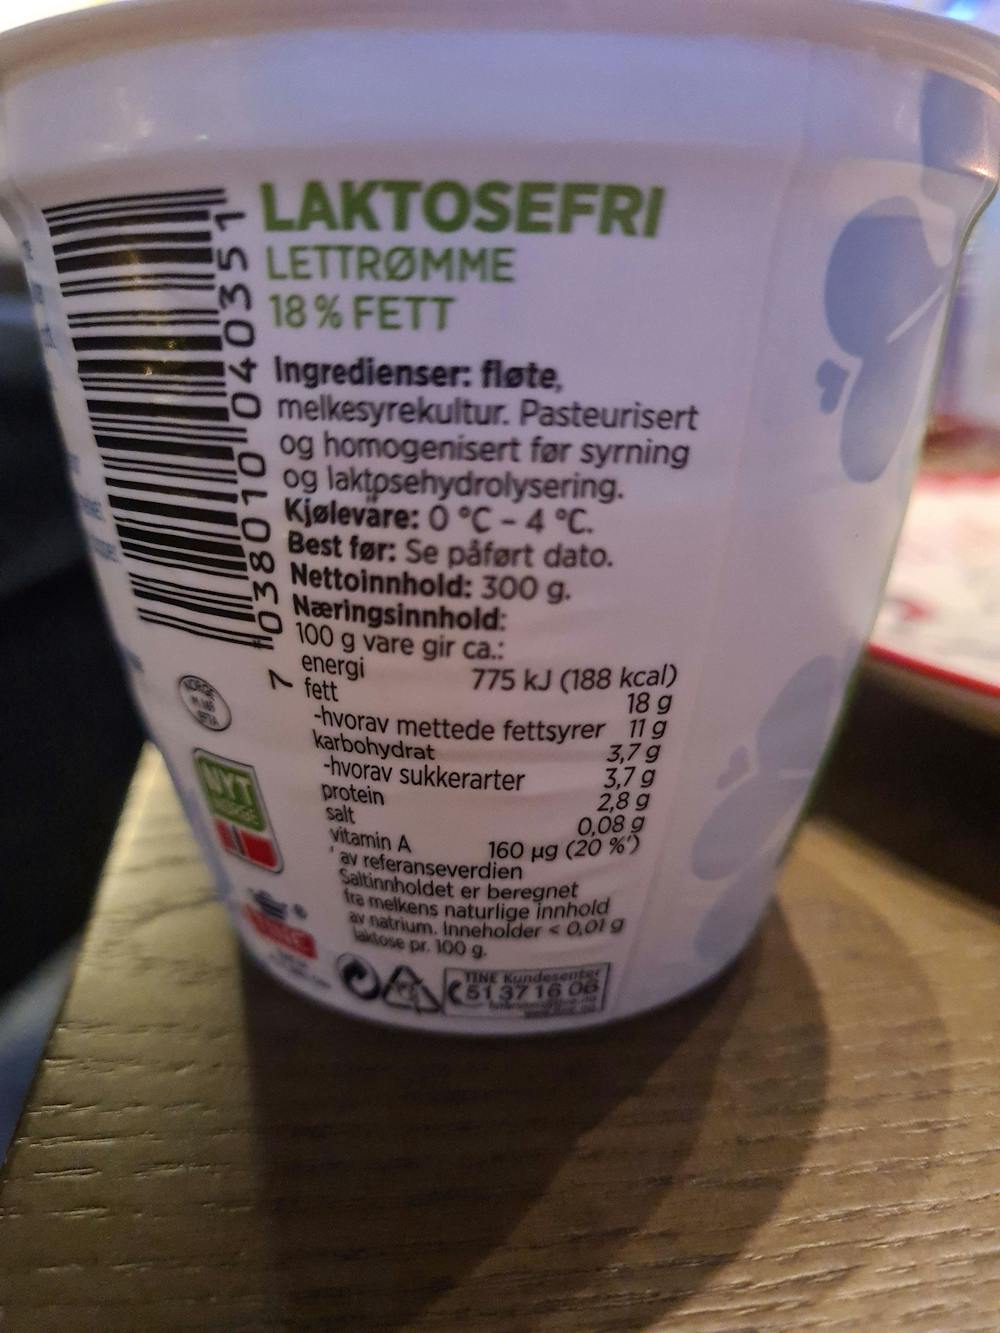 Ingrediensliste - Laktosefri lettrømme, 18% fett, TINE